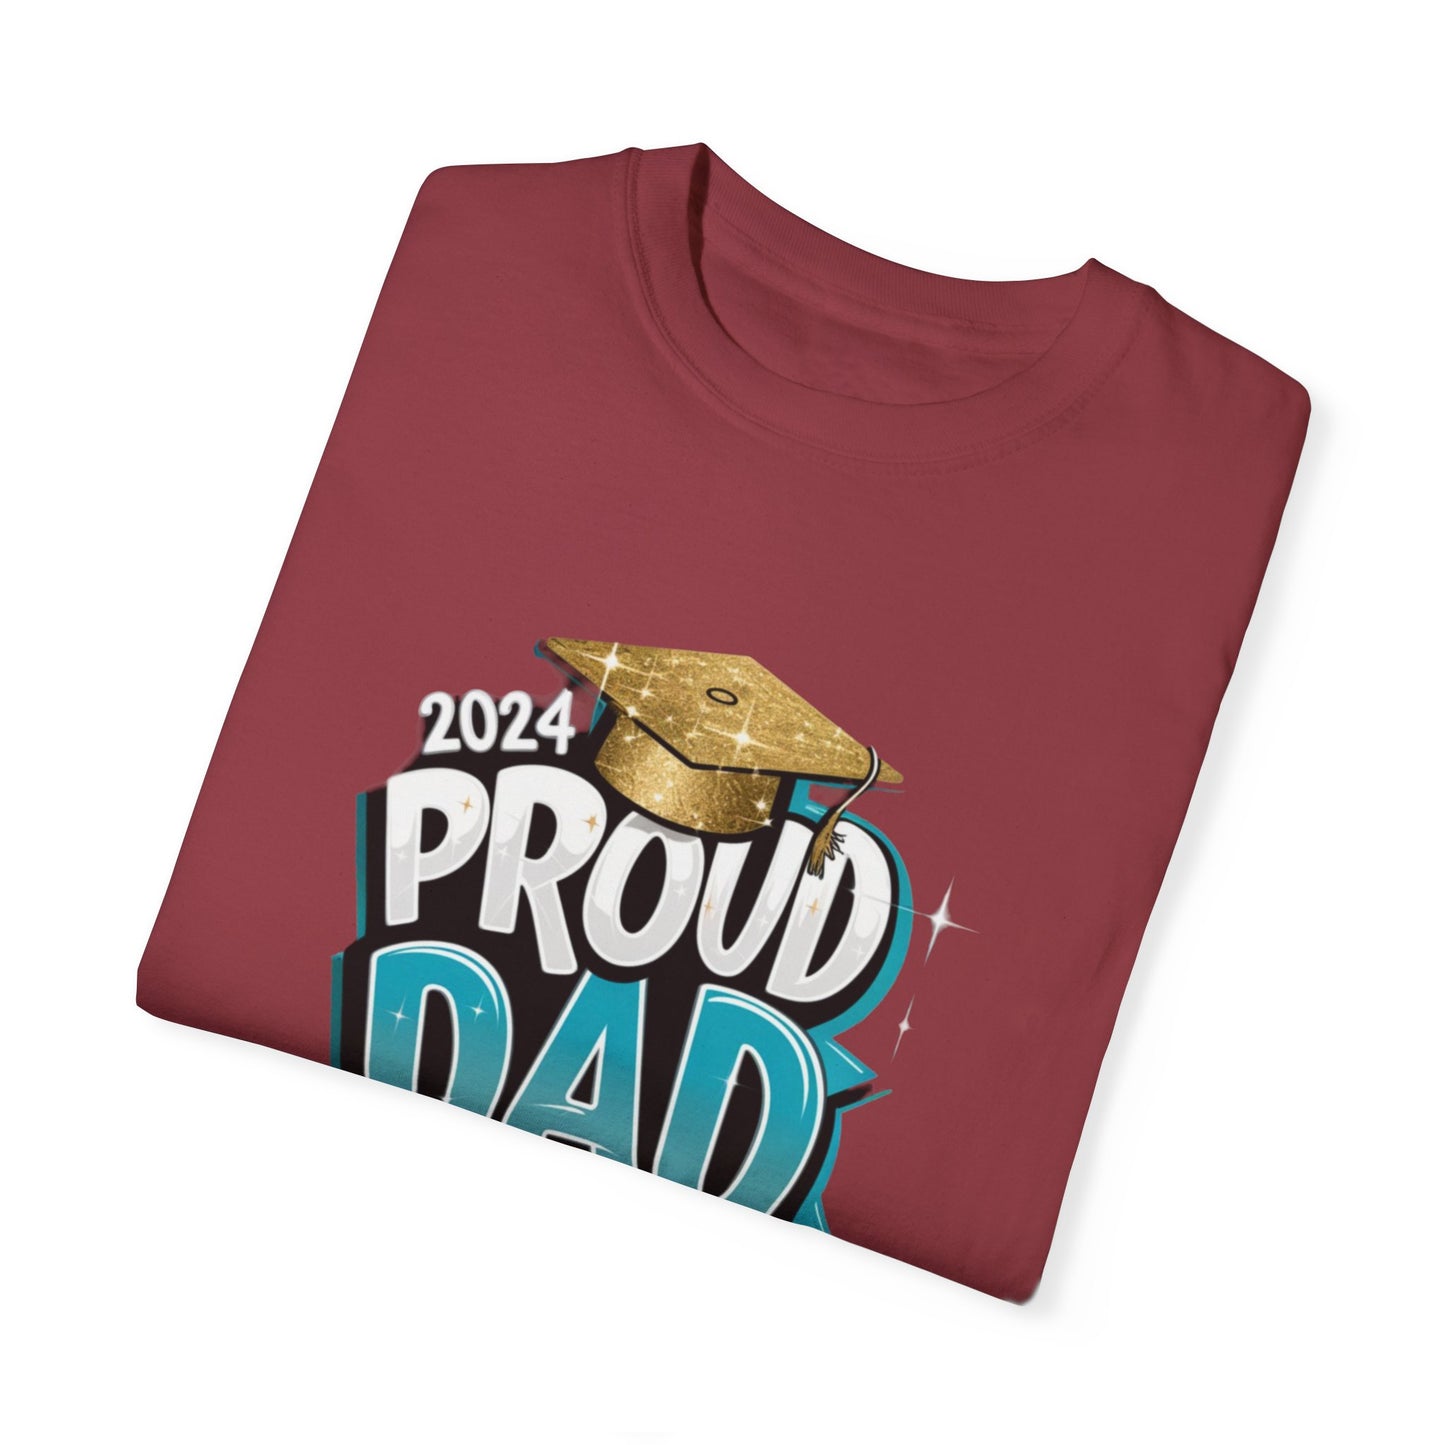 Proud Dad of a 2024 Graduate Unisex Garment-dyed T-shirt Cotton Funny Humorous Graphic Soft Premium Unisex Men Women Chili T-shirt Birthday Gift-35